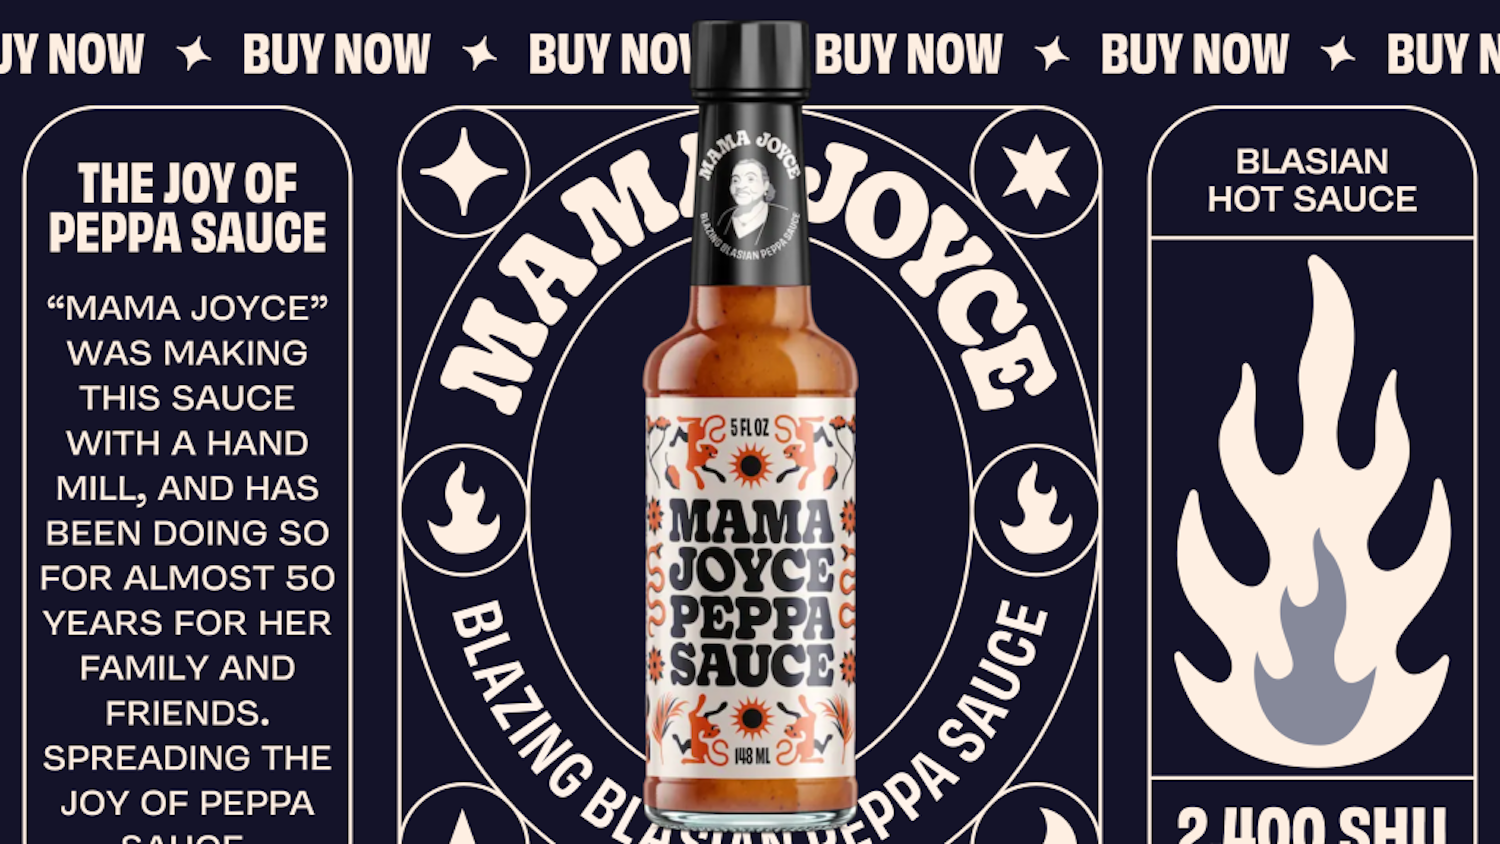 The Mama Joyce Peppa Sauce homepage